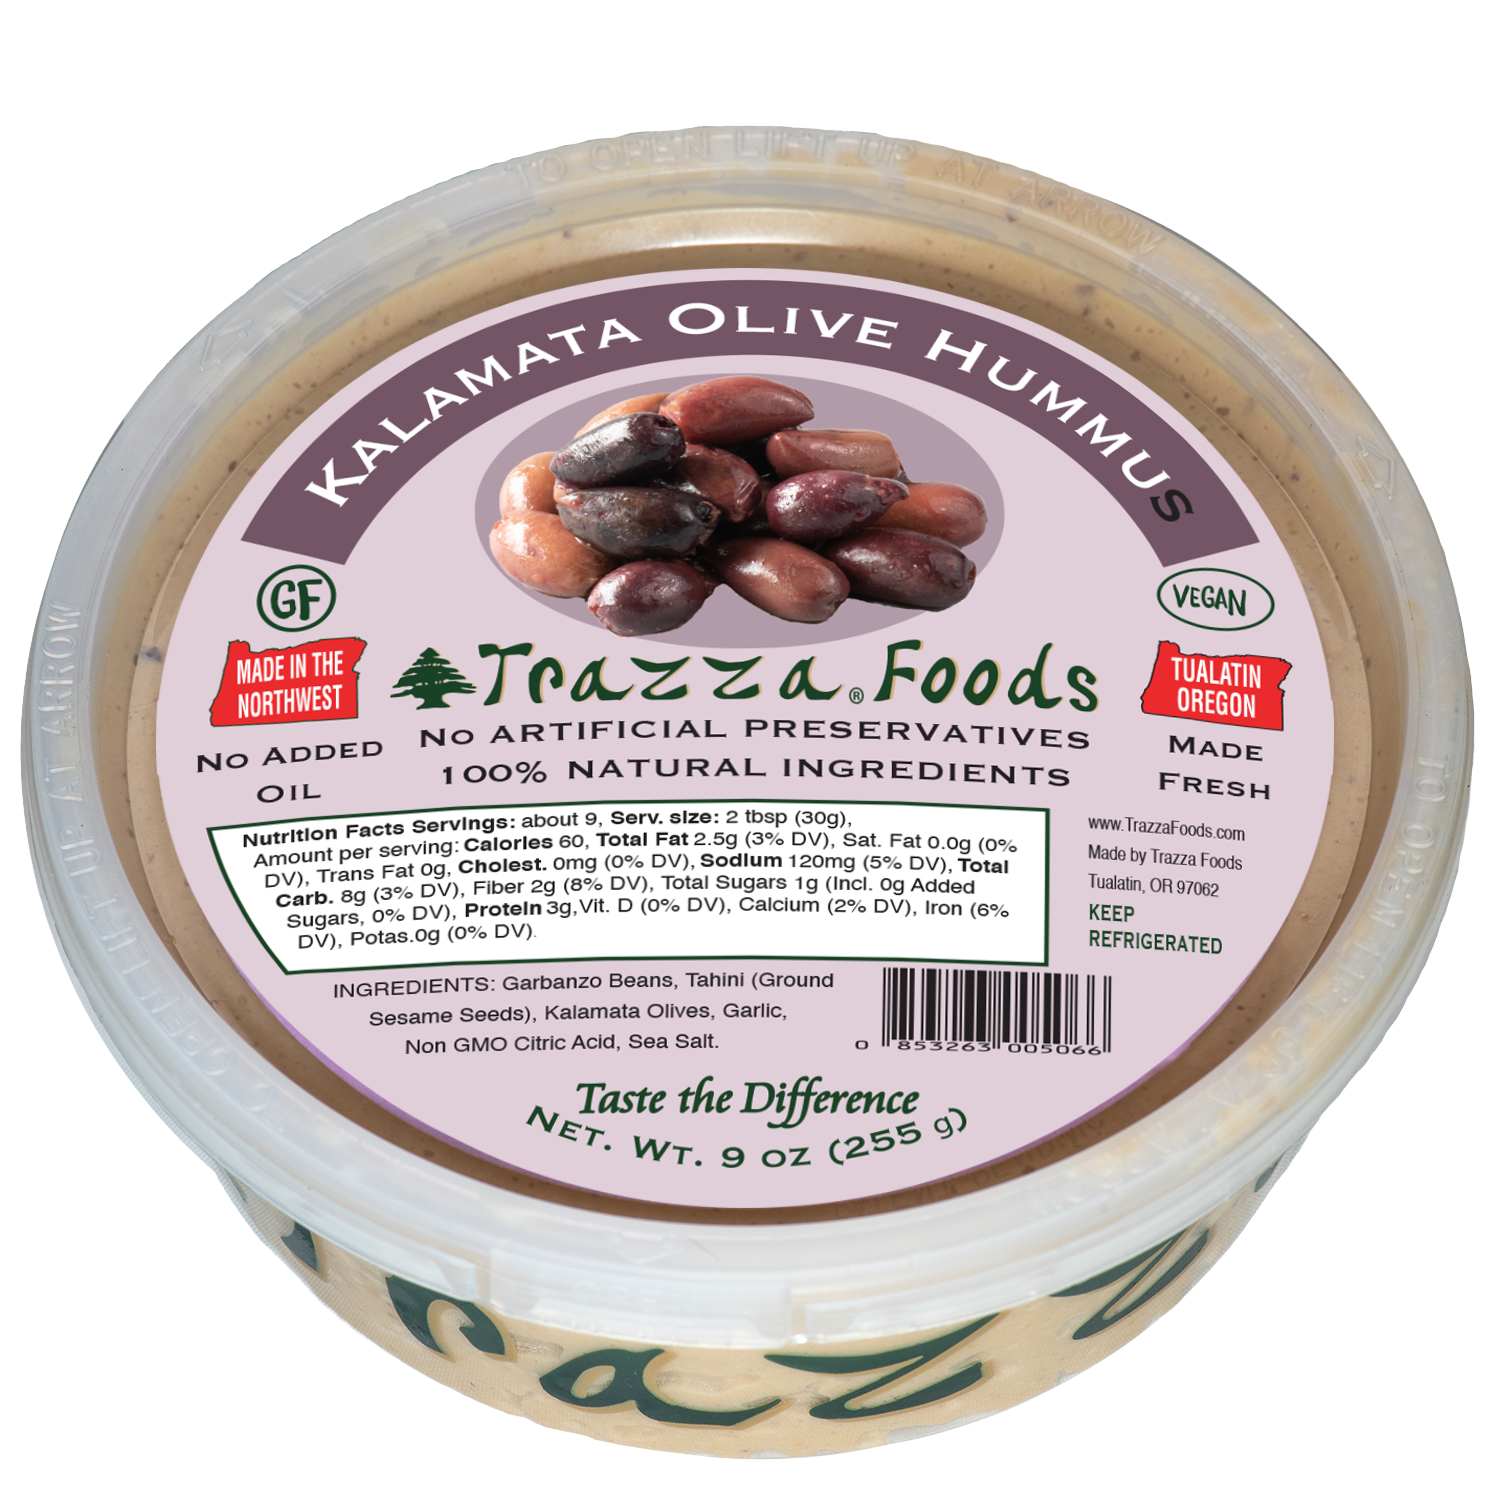 Kalamata Olive Hummus